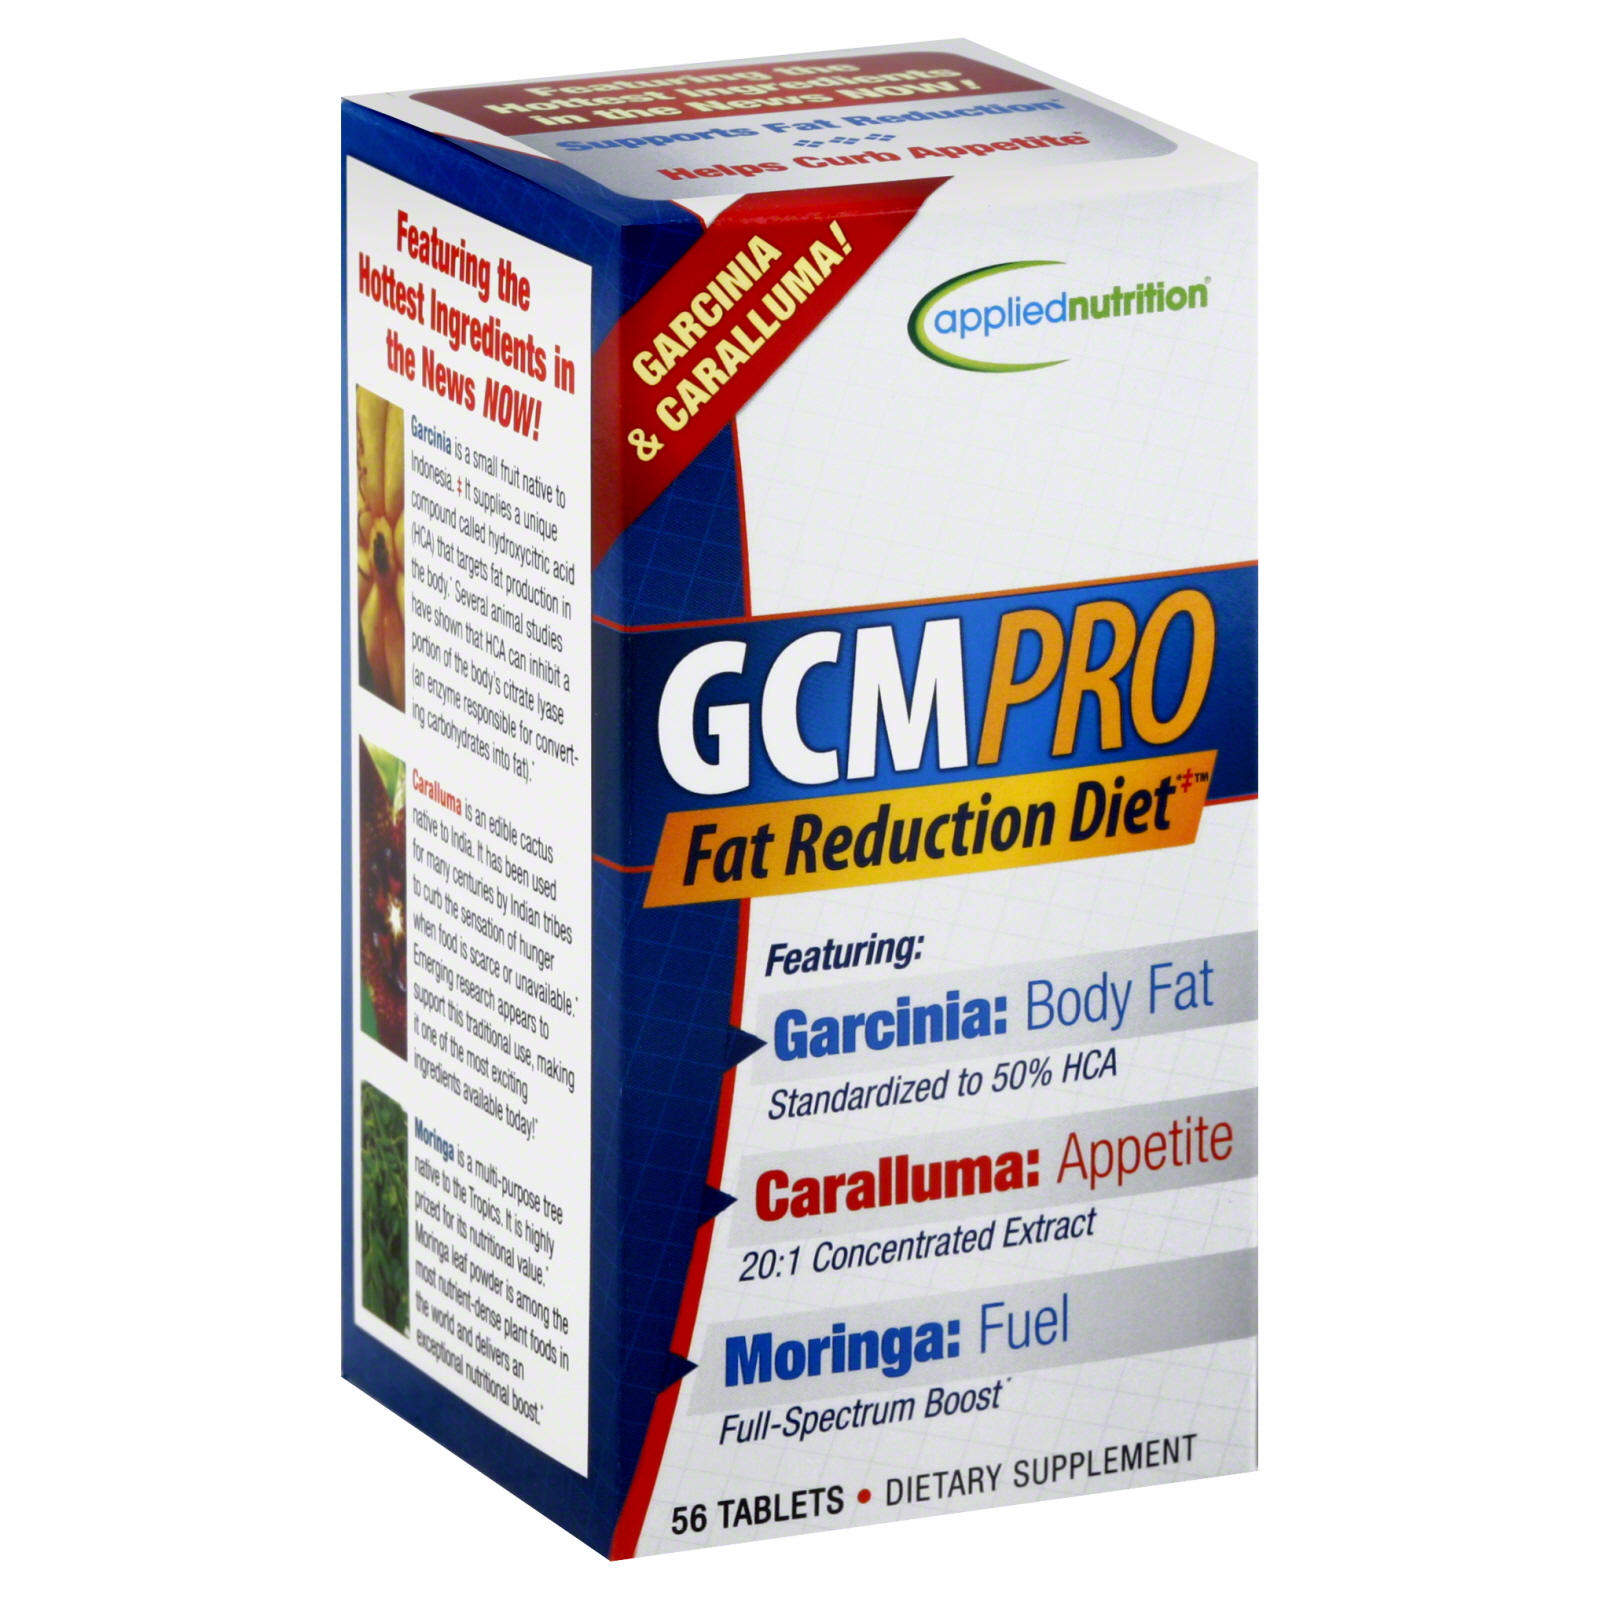 Applied Nutrition GCM Pro Fat Reduction Diet, 56 tablets